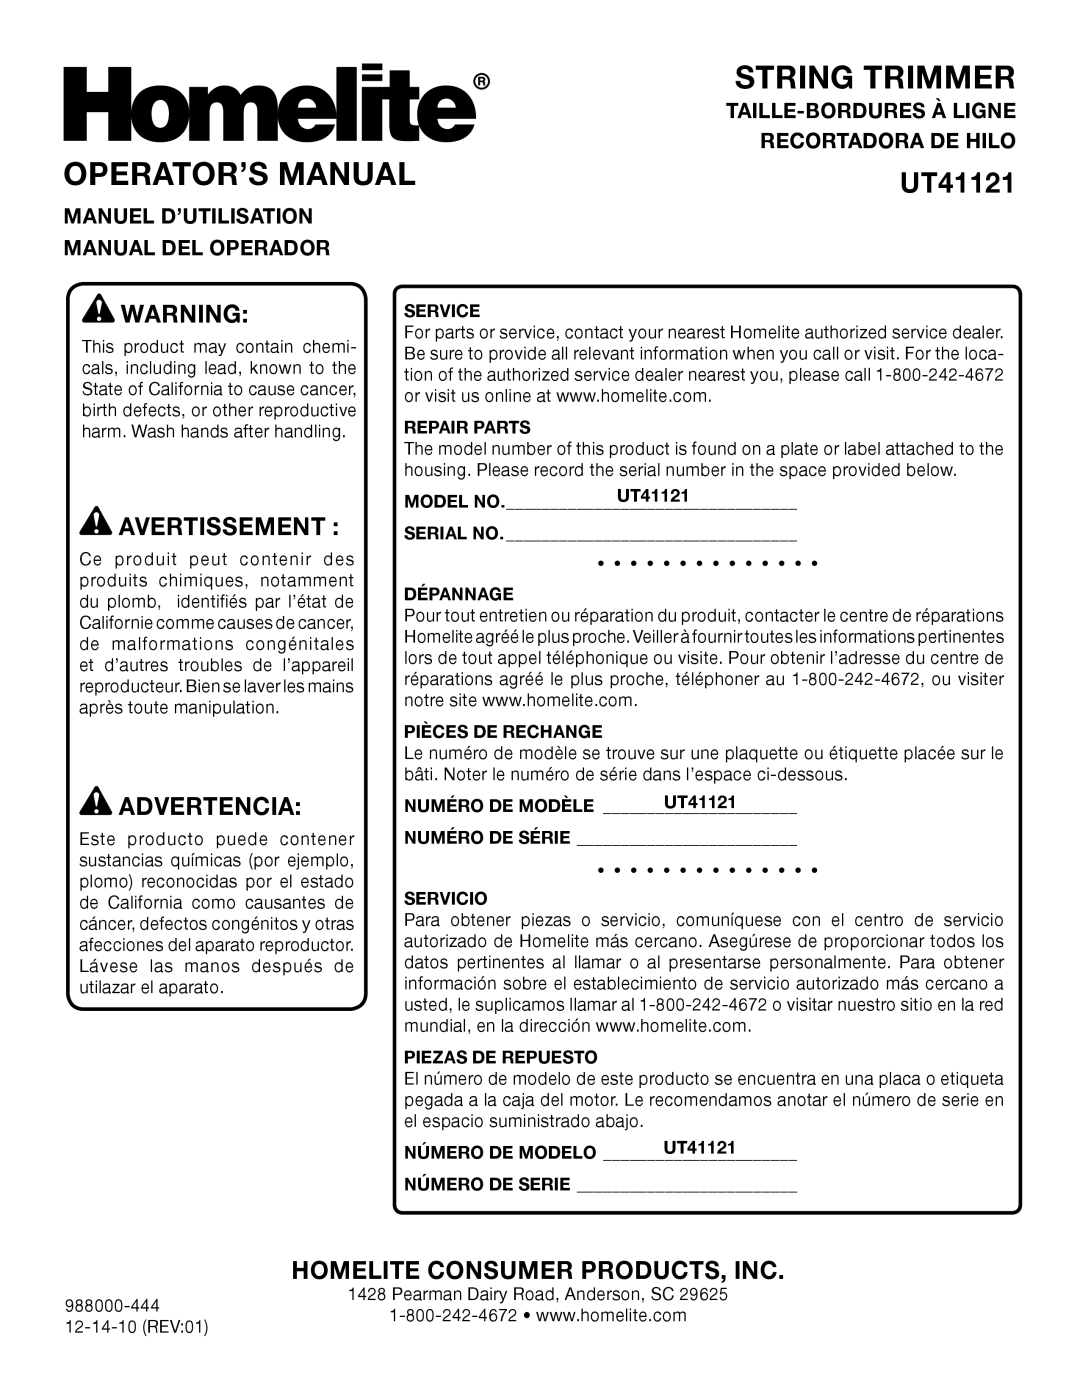 Homelite UT41121 String Trimmer, Operator’S Manual, Recortadora De Hilo, Manuel D’Utilisation Manual Del Operador, Service 